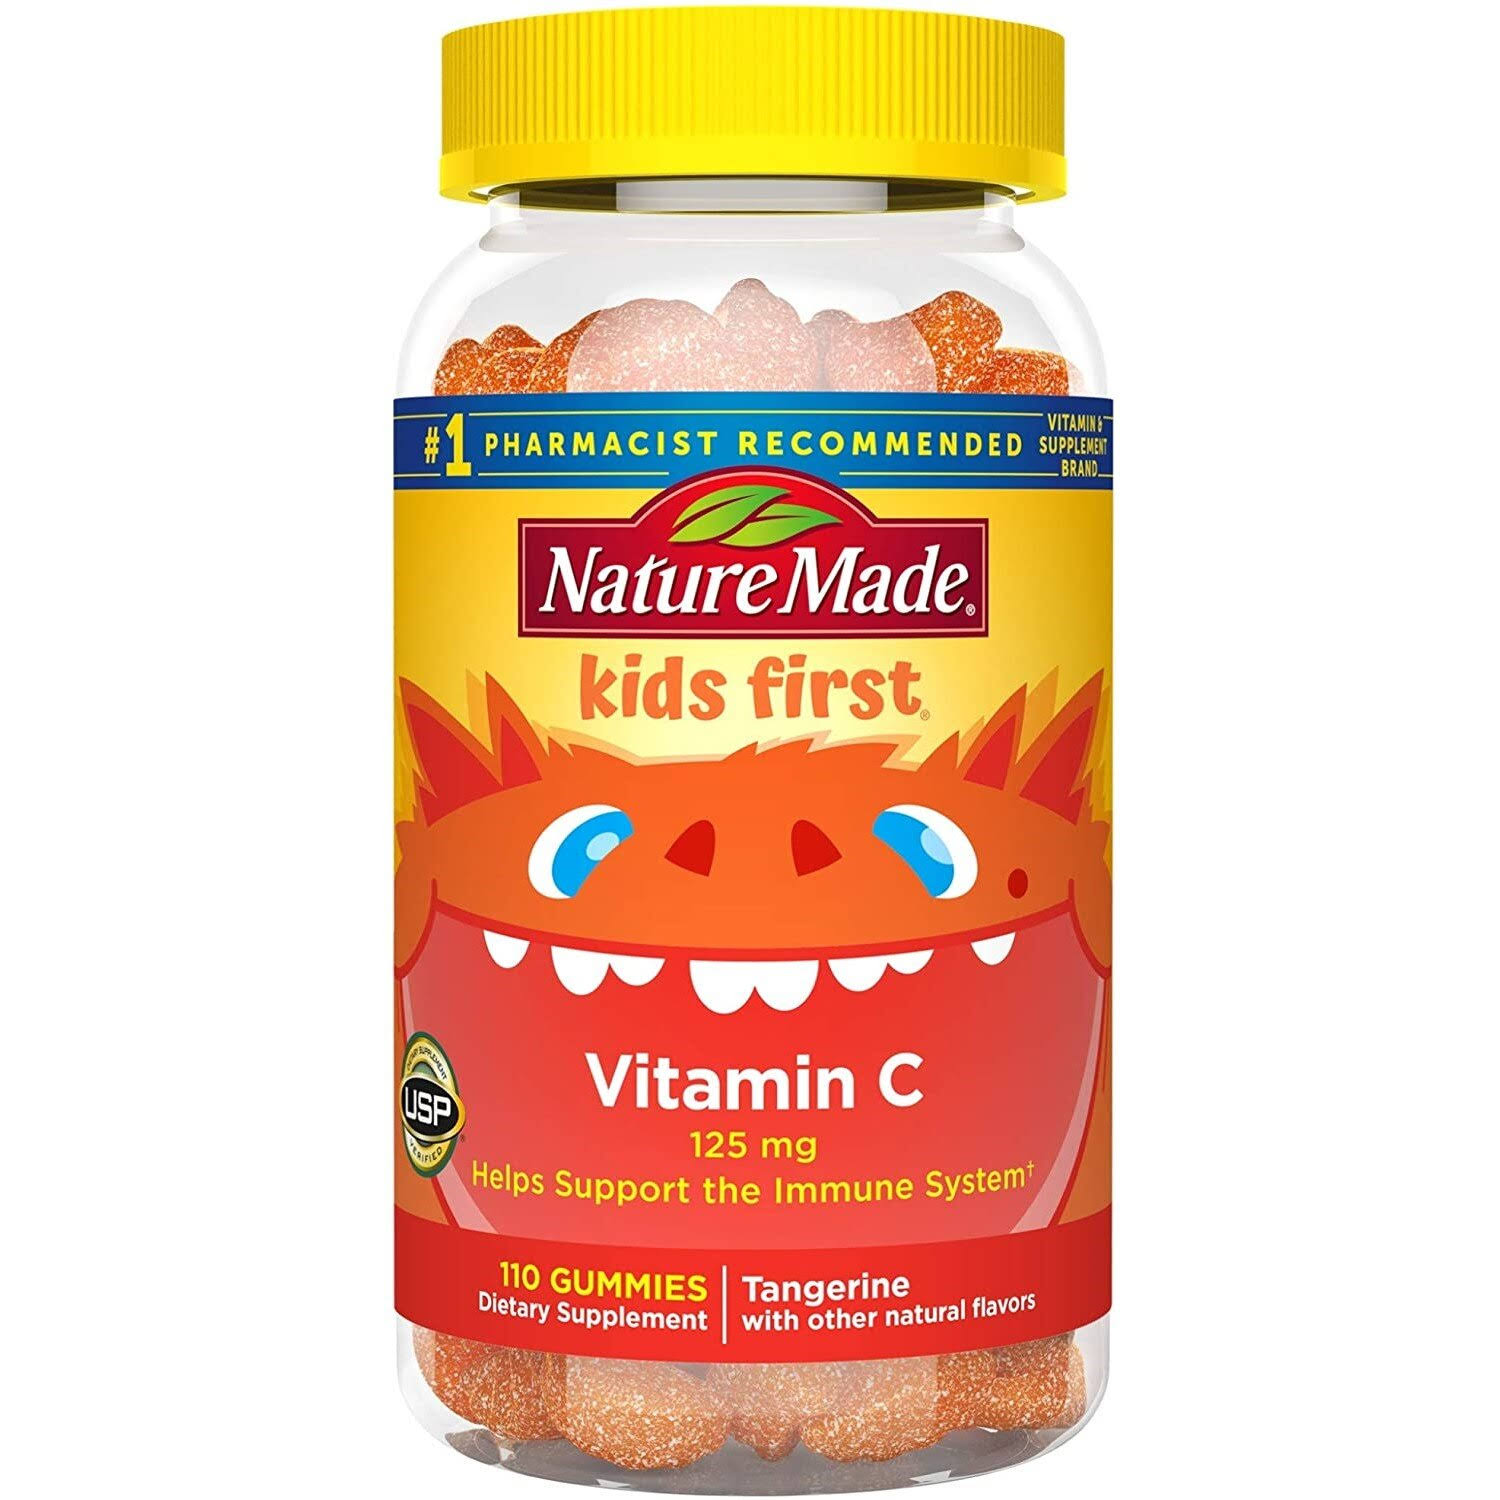 Nature Made Kids First Vitamin C Dietary Supplement Gummies - Tangerine, 110ct